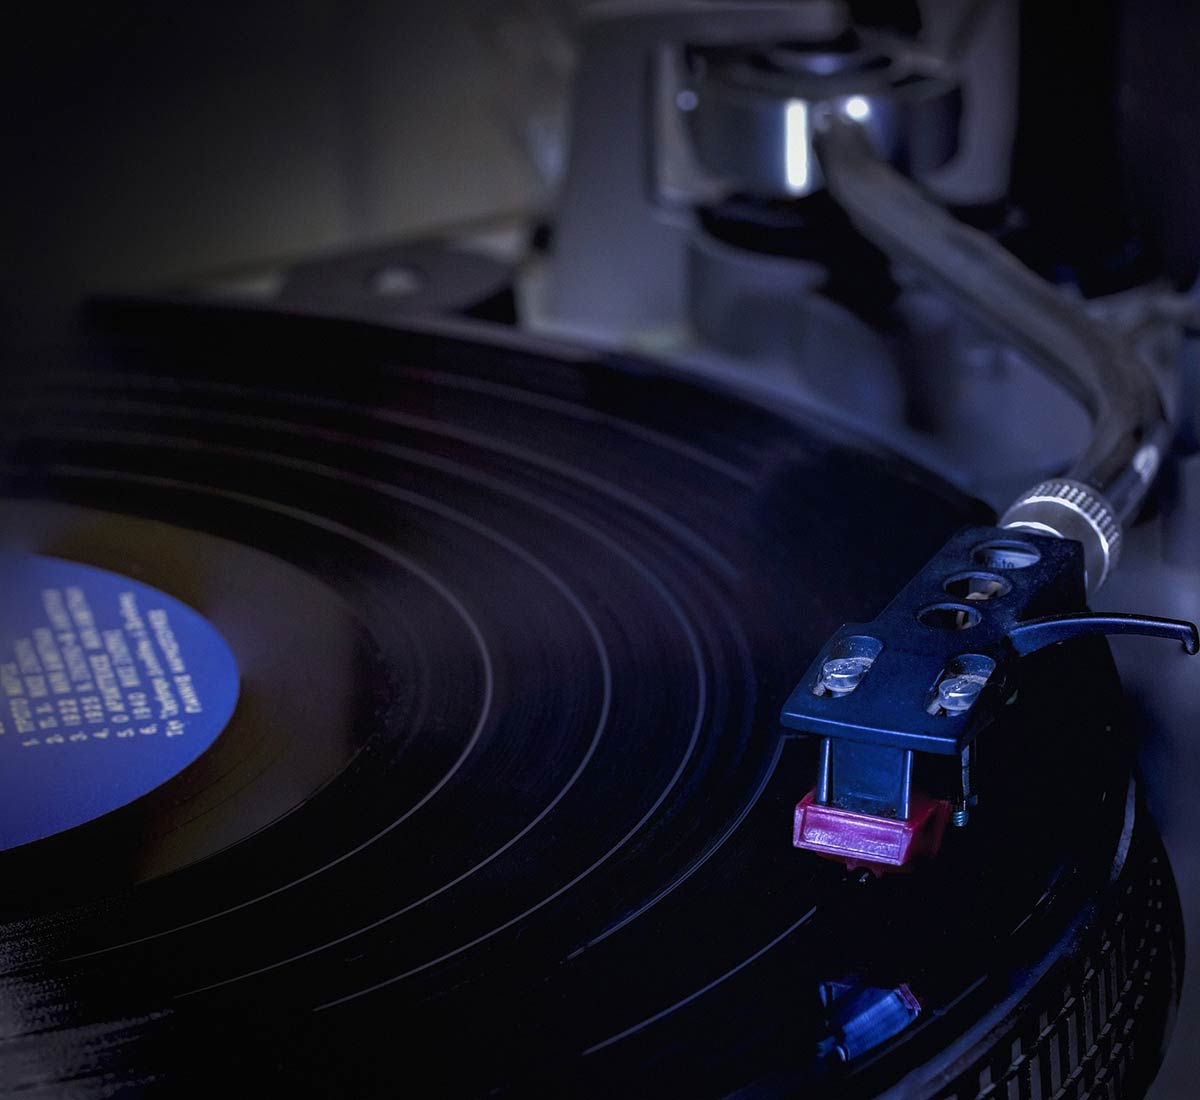 Transferring a large vinyl record to digital files